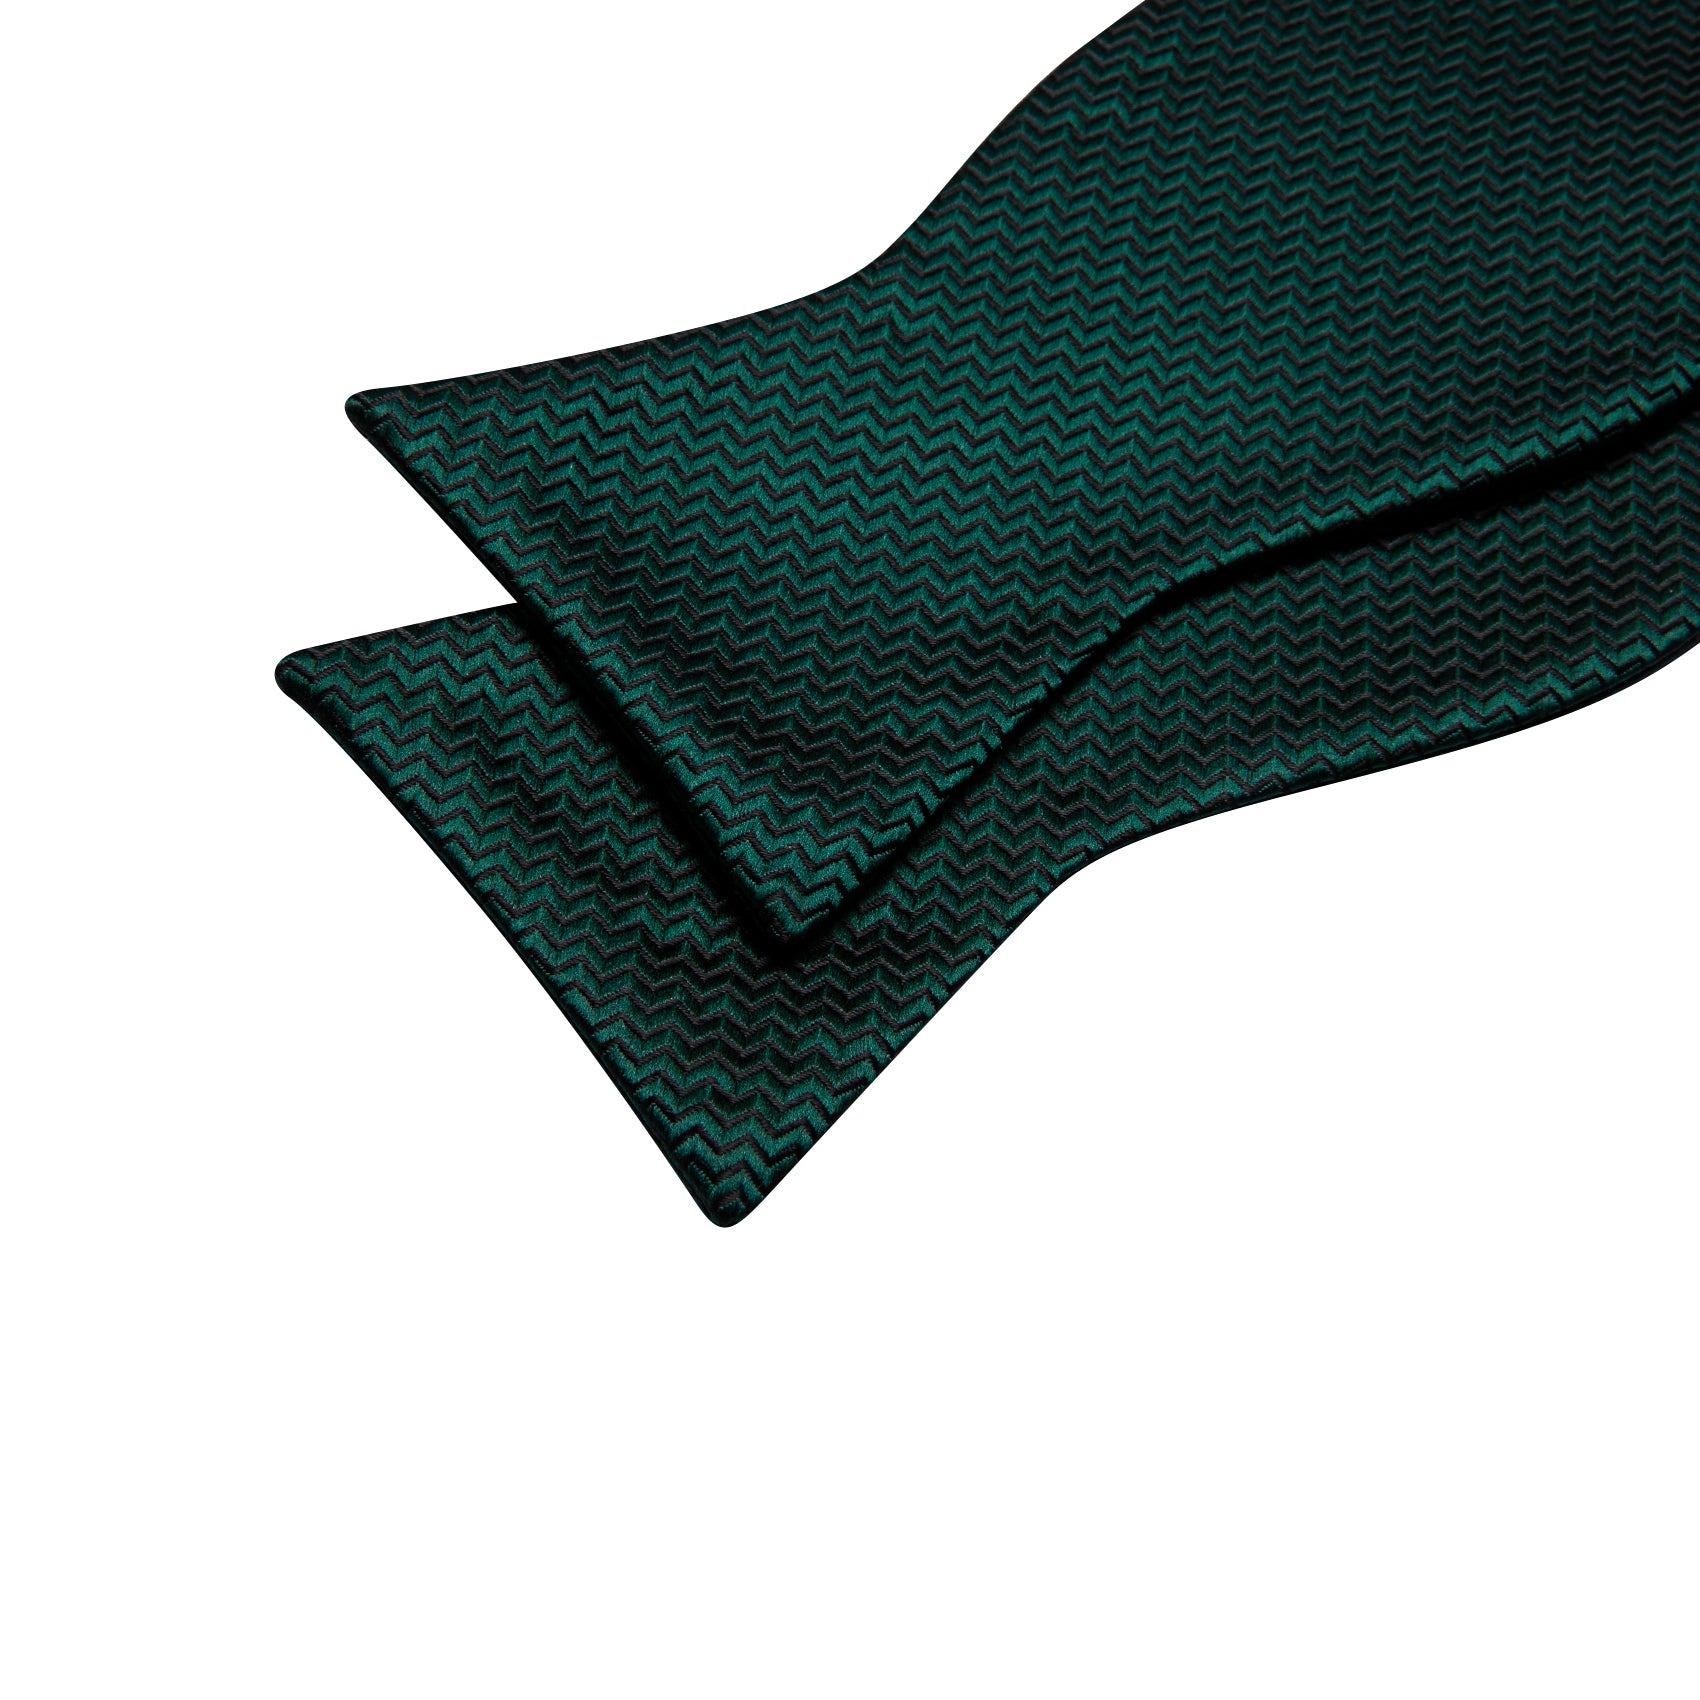 Dark Green Solid Silk Bow Tie Hanky Cufflinks Set